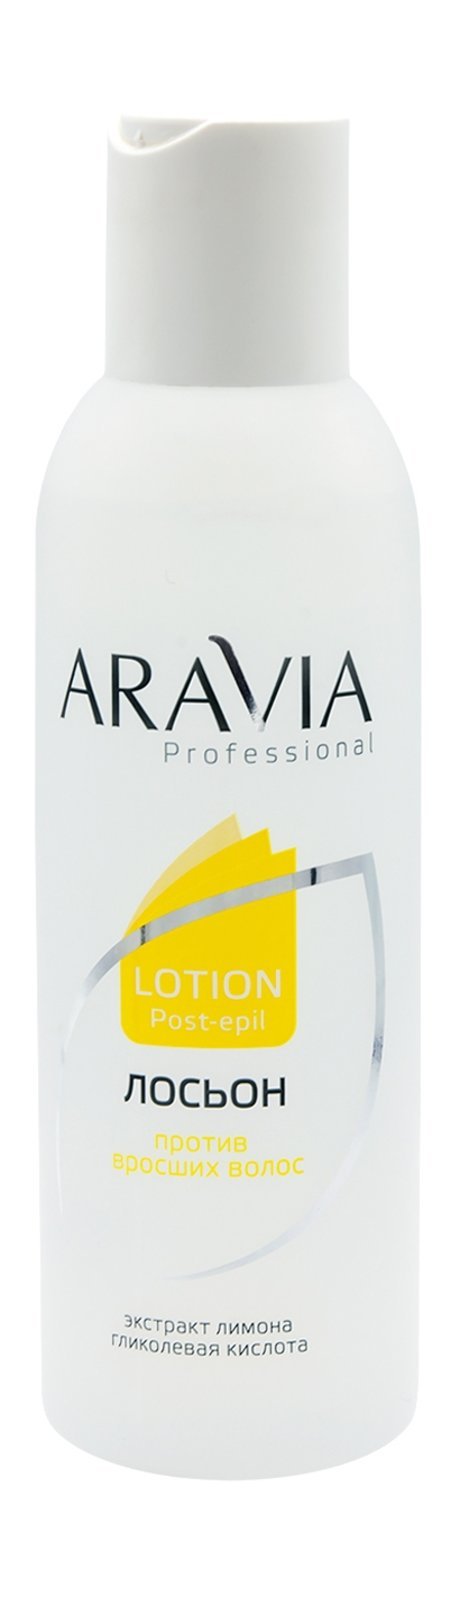 Aravia Professional Lotion Post-Epil Lemon